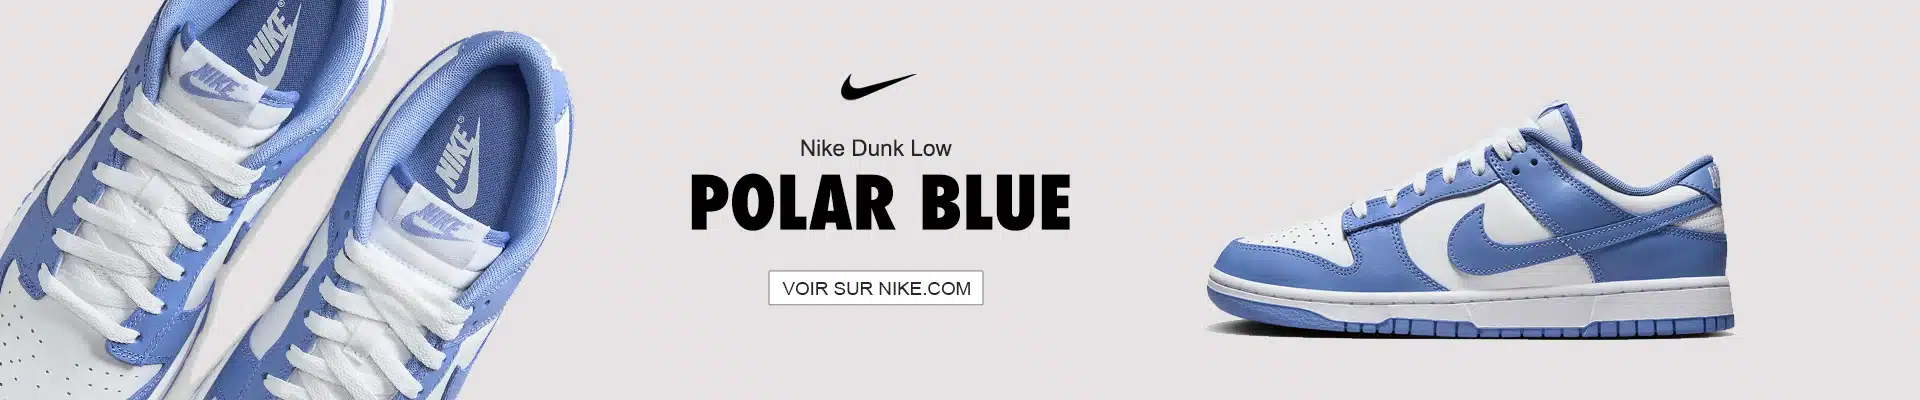 Nike Air Jordan 14 Retro XIV Low Laney White Black Red 807511 Polar Blue